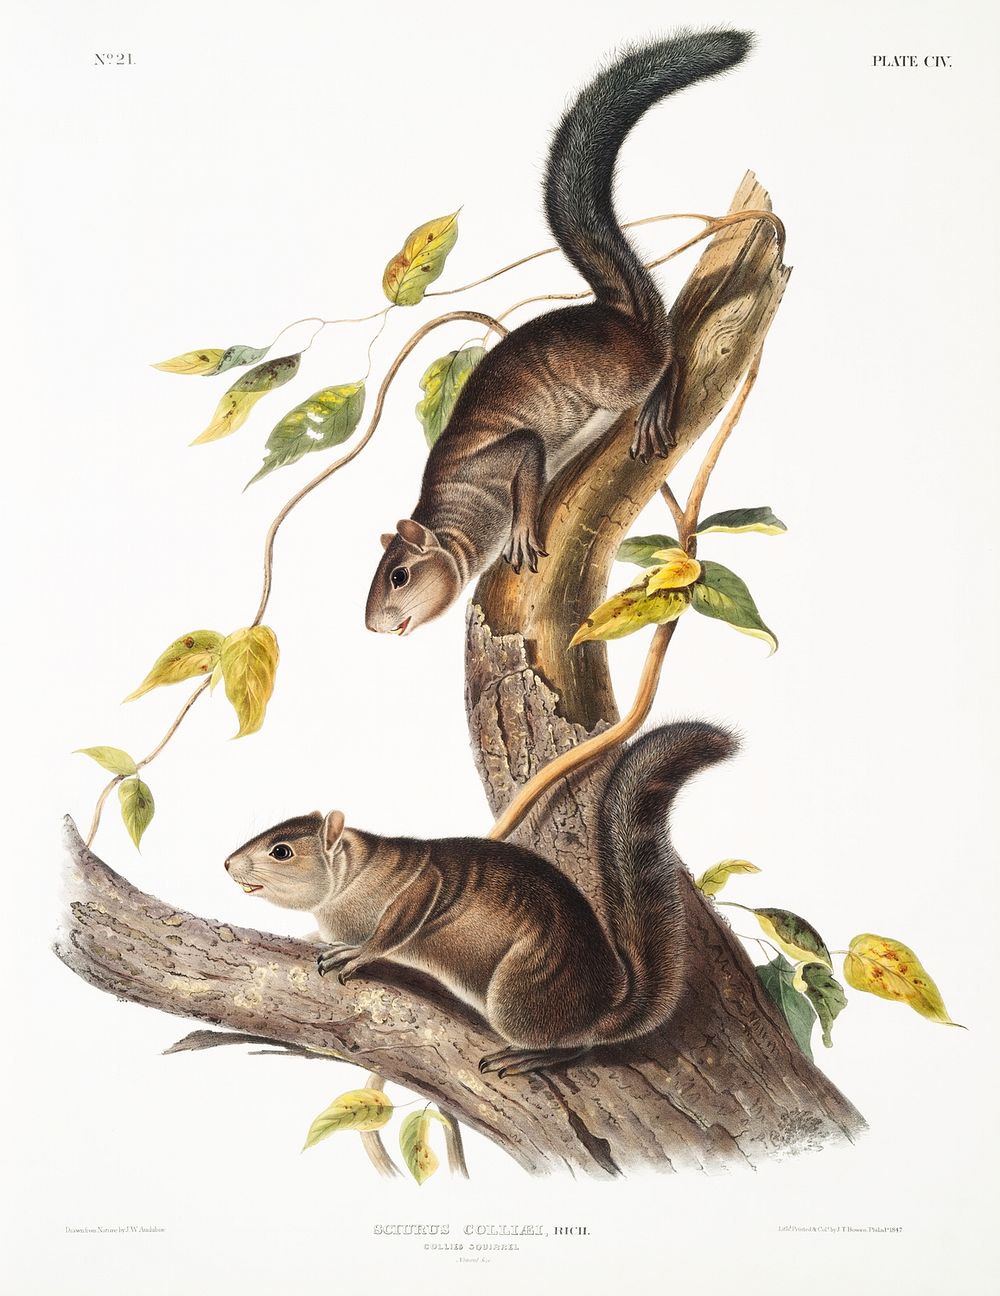 Collies Squirrel (Sciurus colliaei) from the viviparous quadrupeds of North America (1845) illustrated by John Woodhouse…